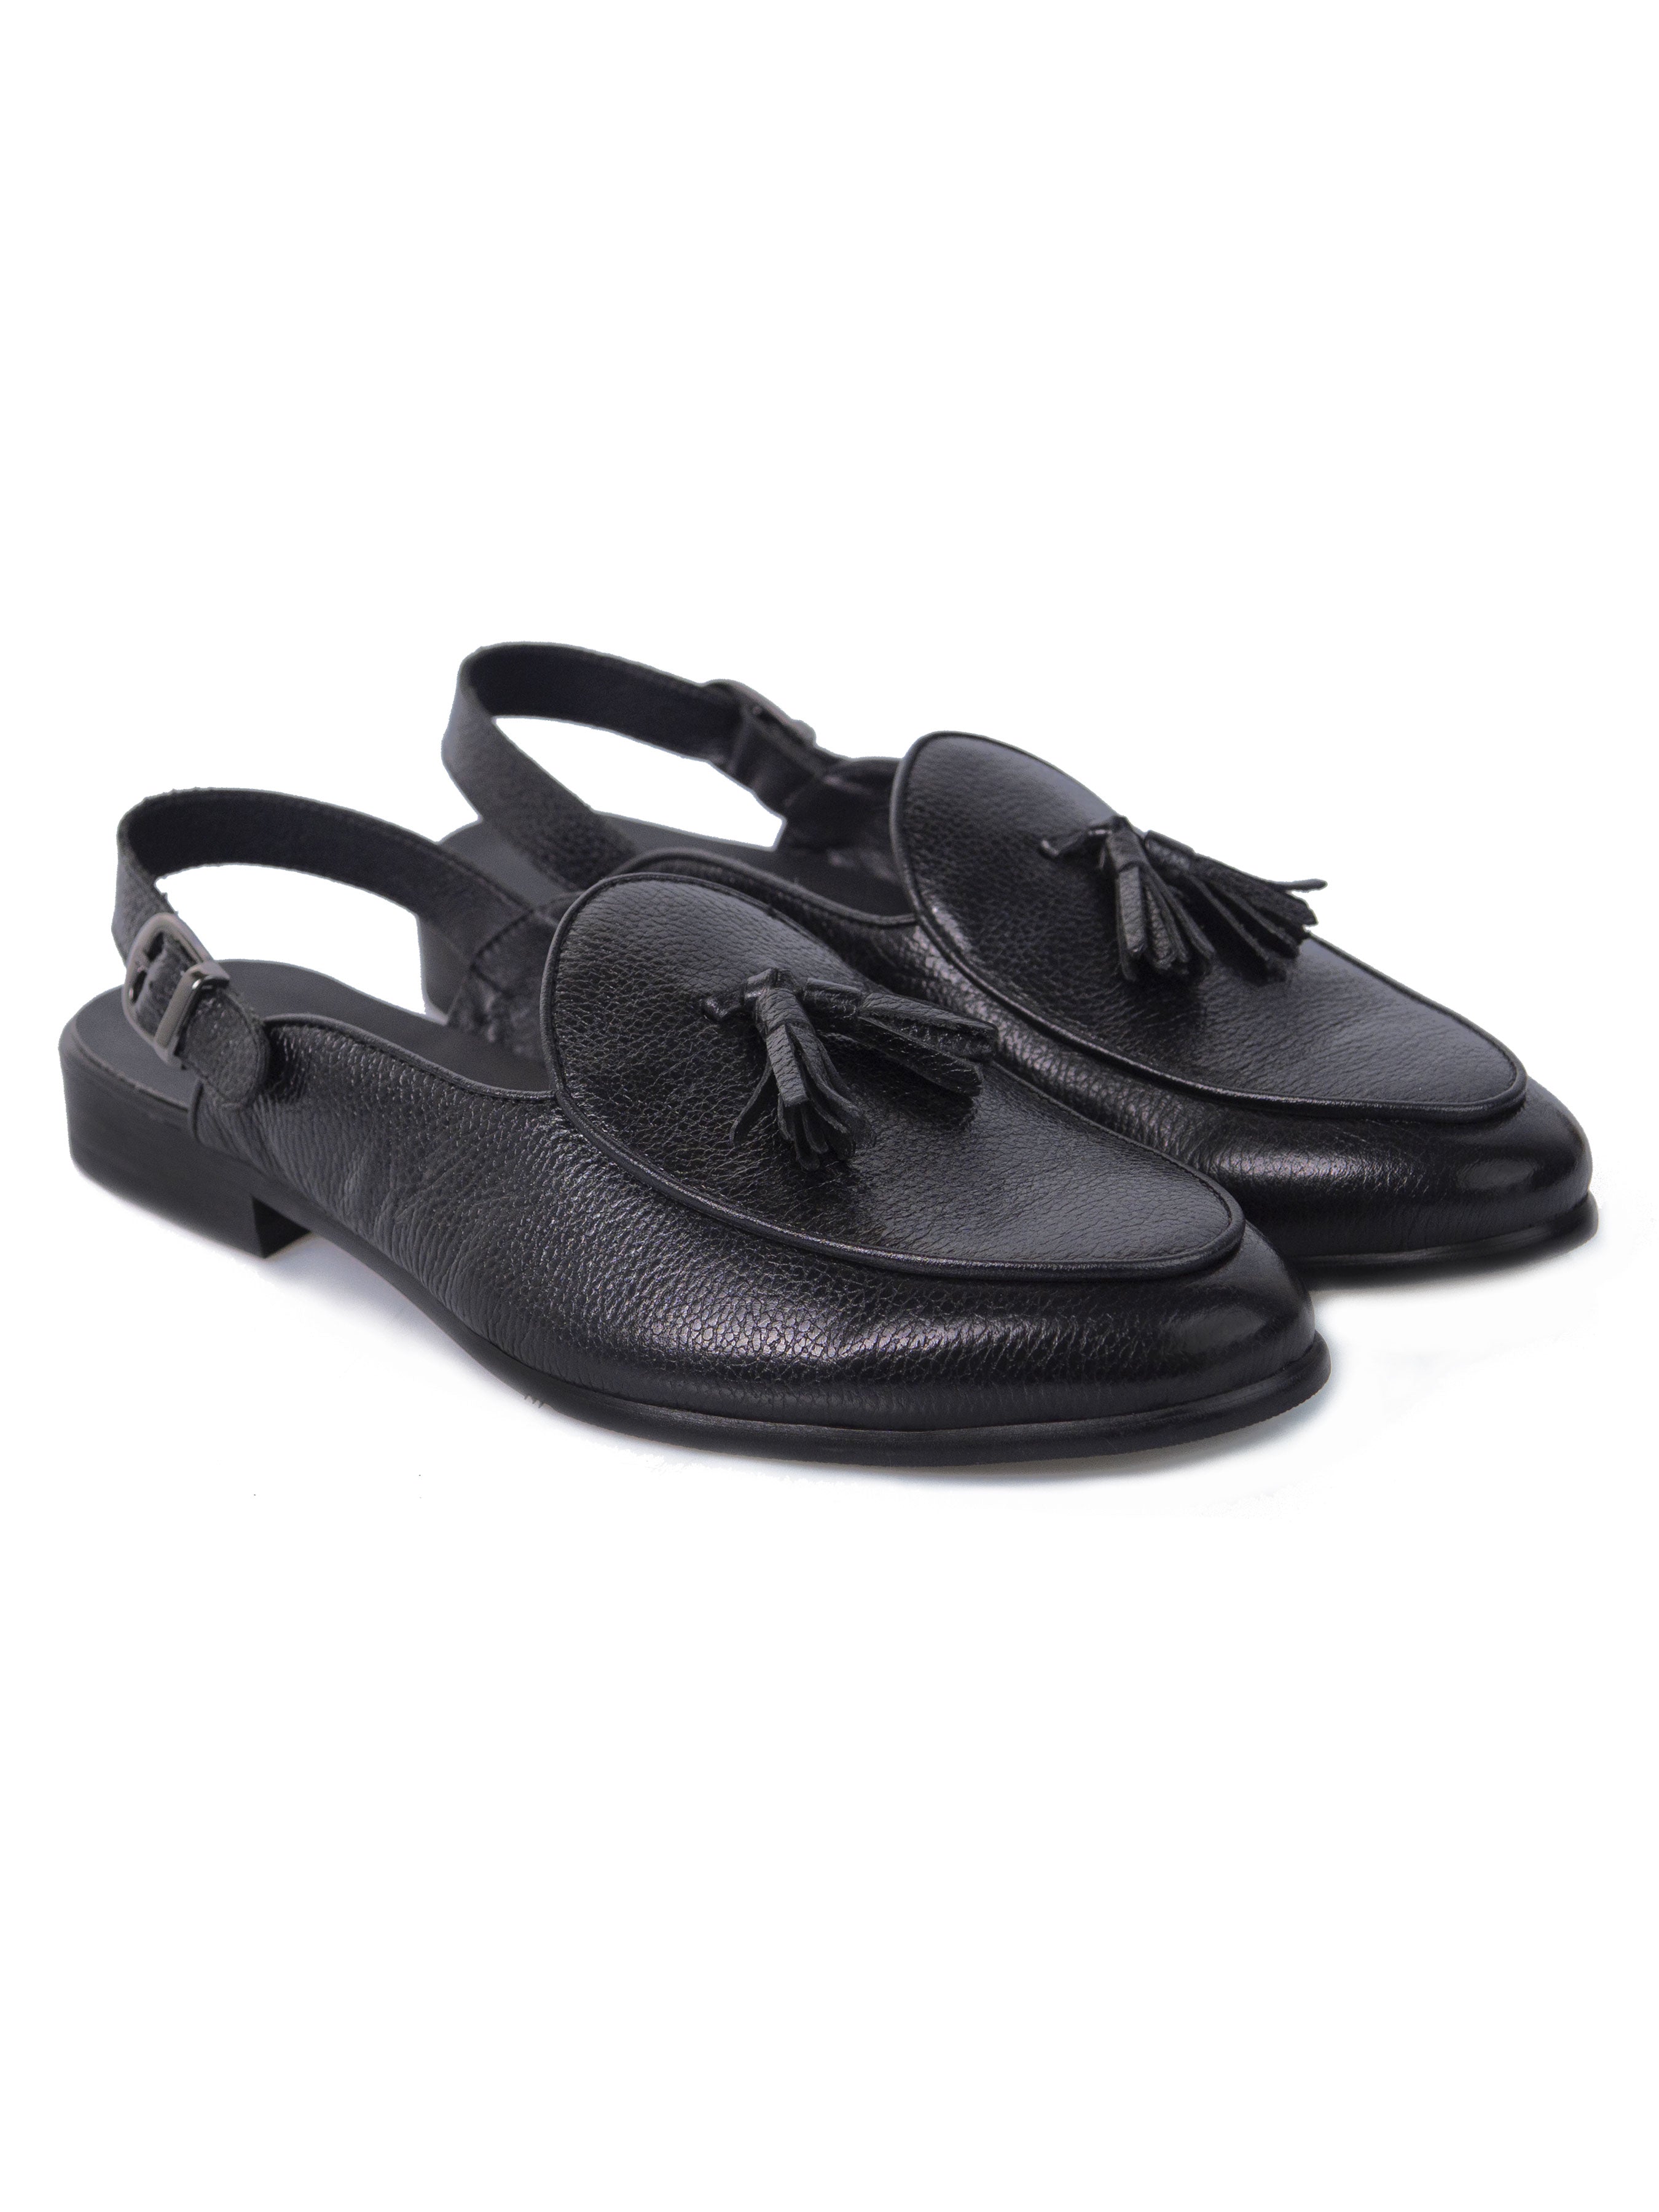 Mules Belgian Tassel Slingback Strap - Black Pebble Grain Leather - Zeve Shoes